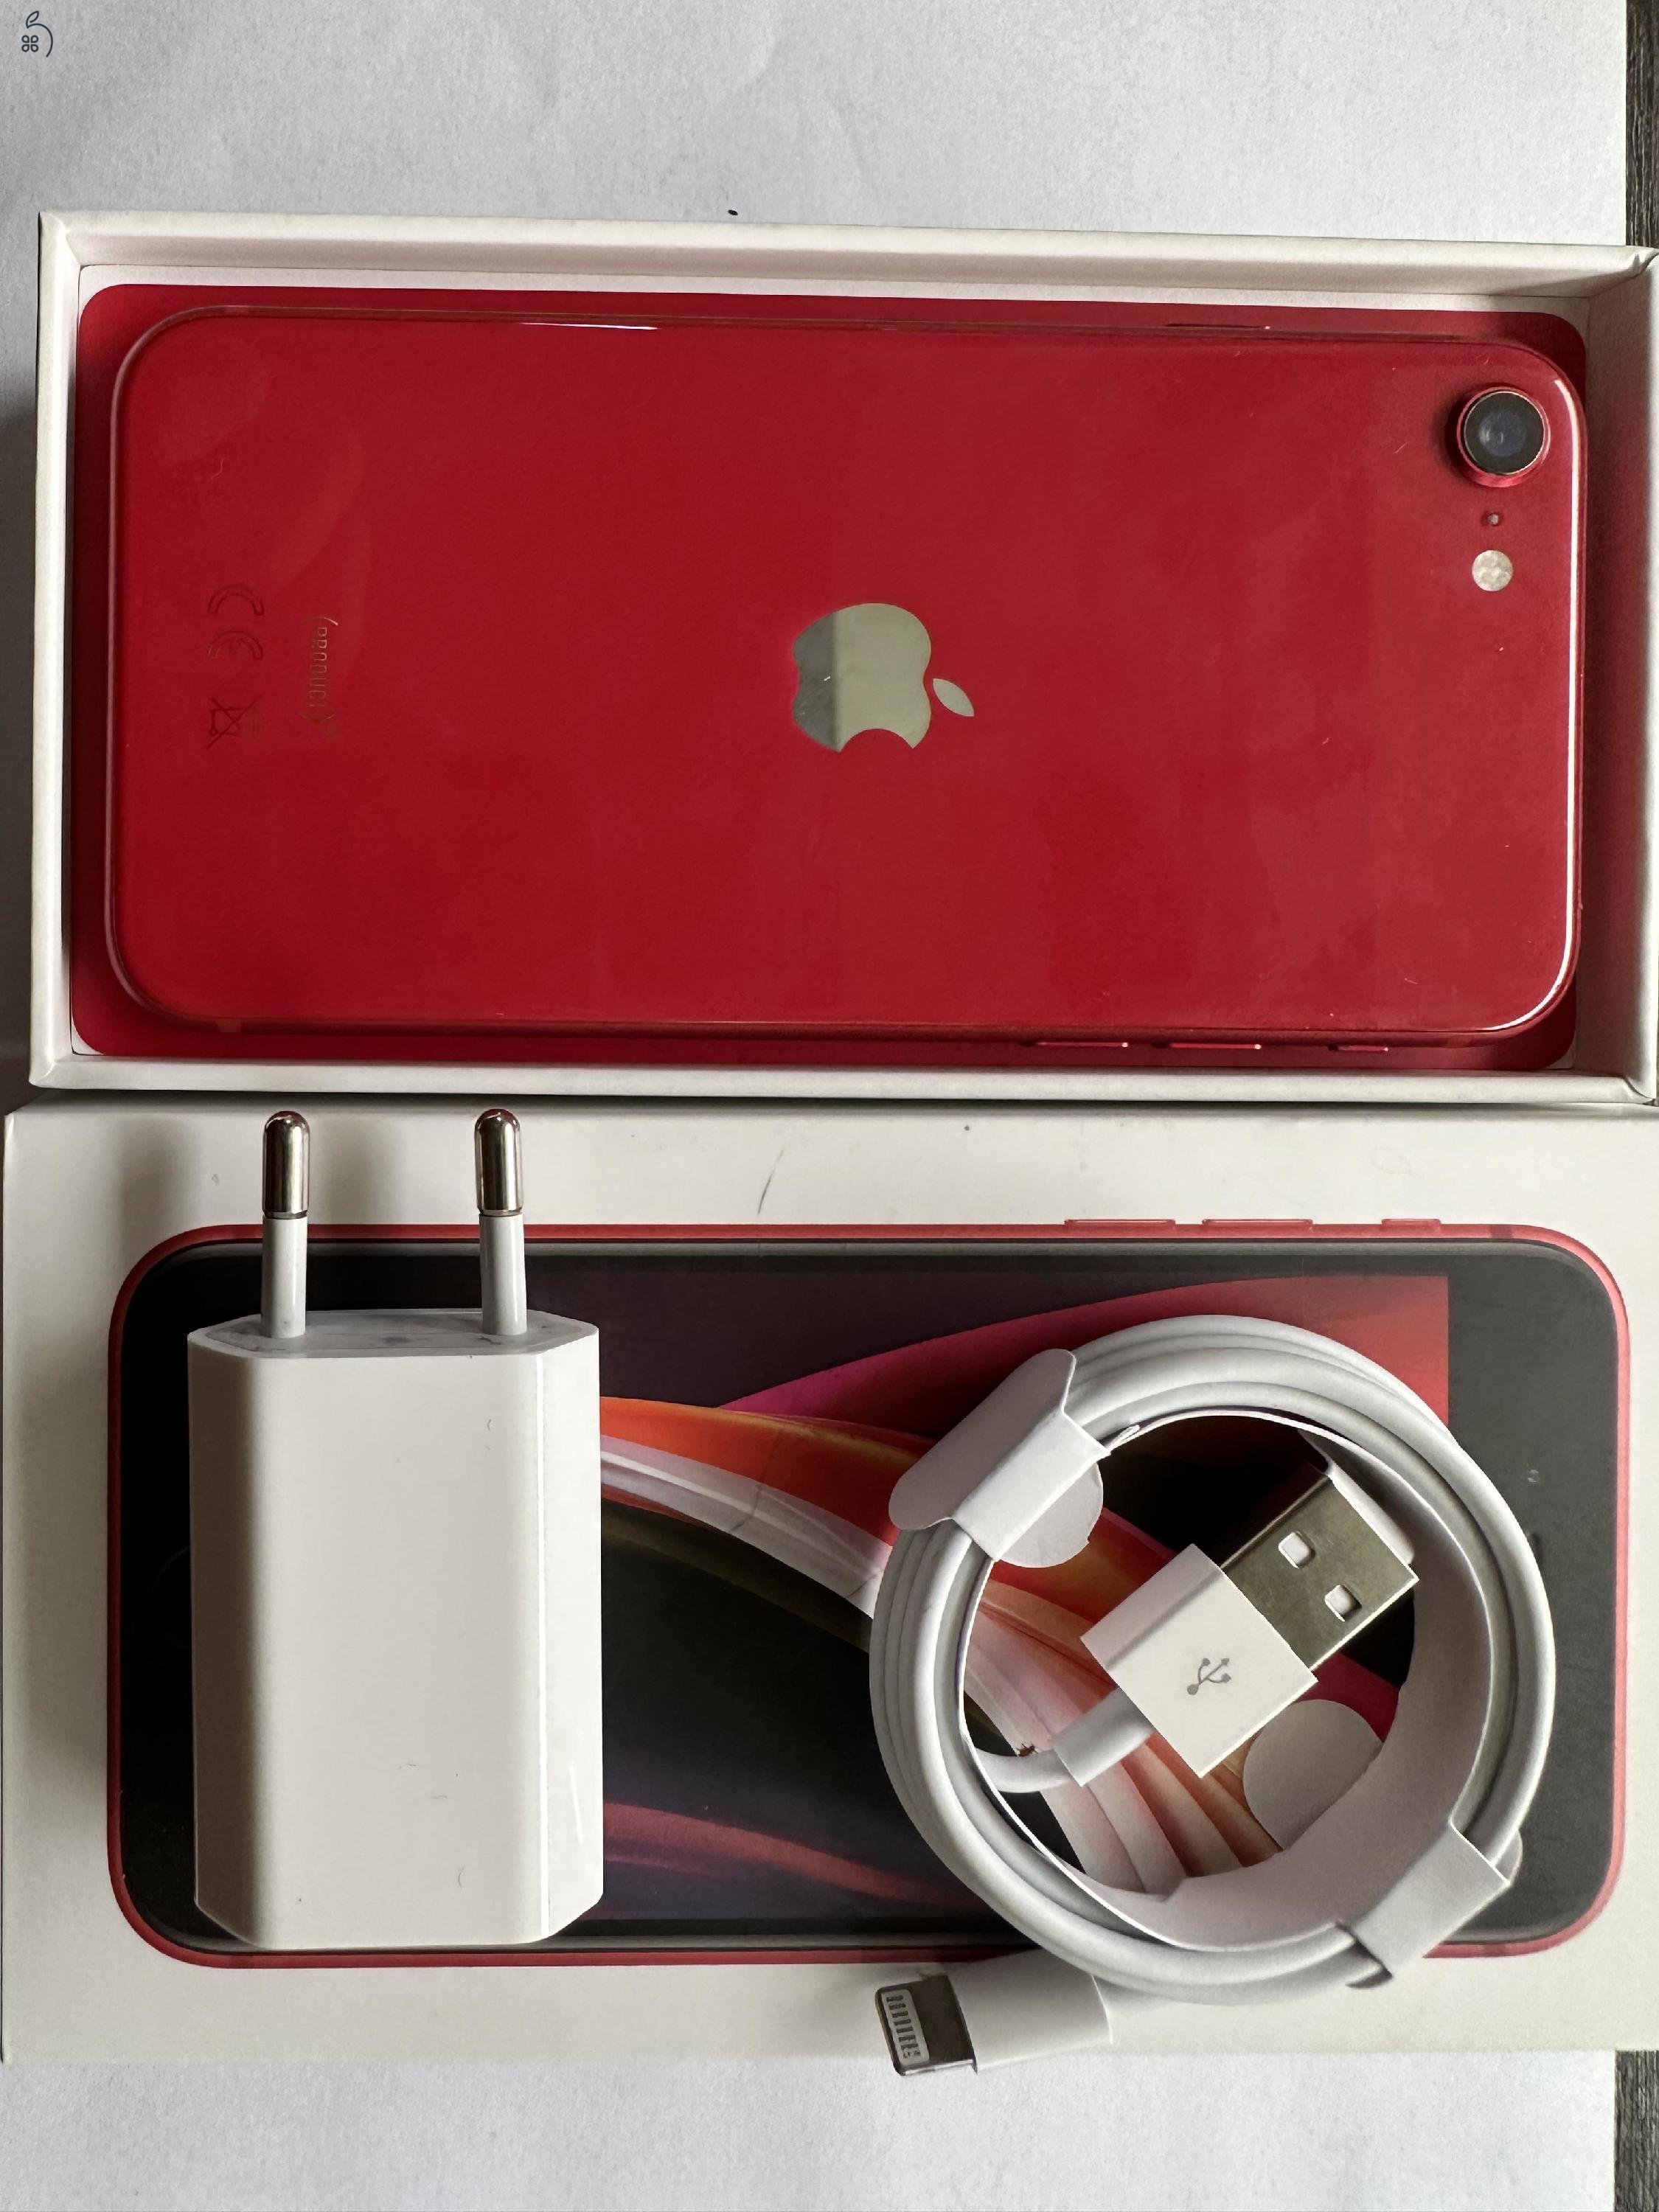 Iphone SE 2020, RED, 64GB